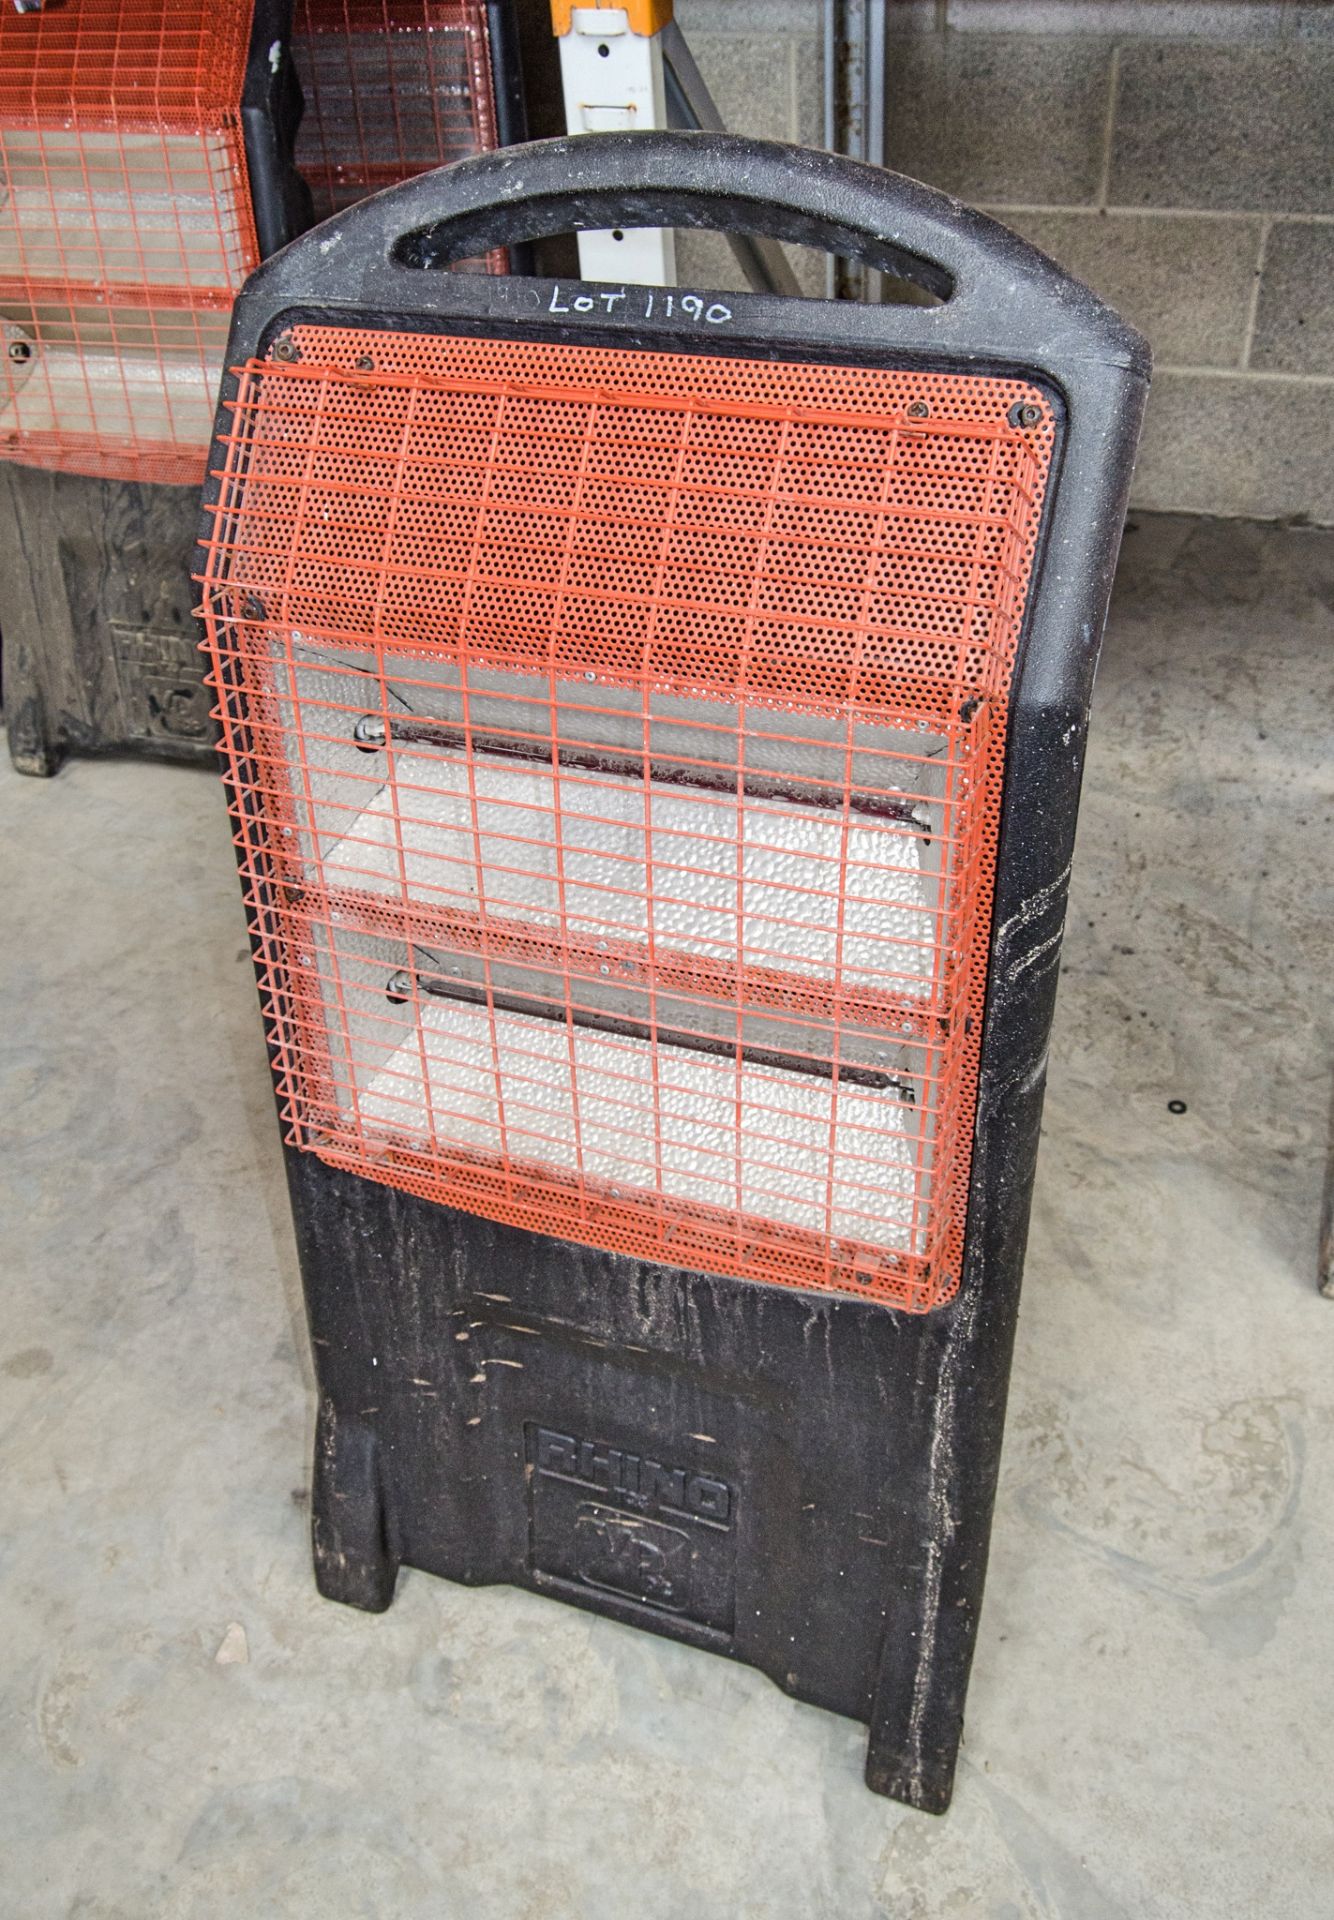 Rhino TQ3 110v infrared heater